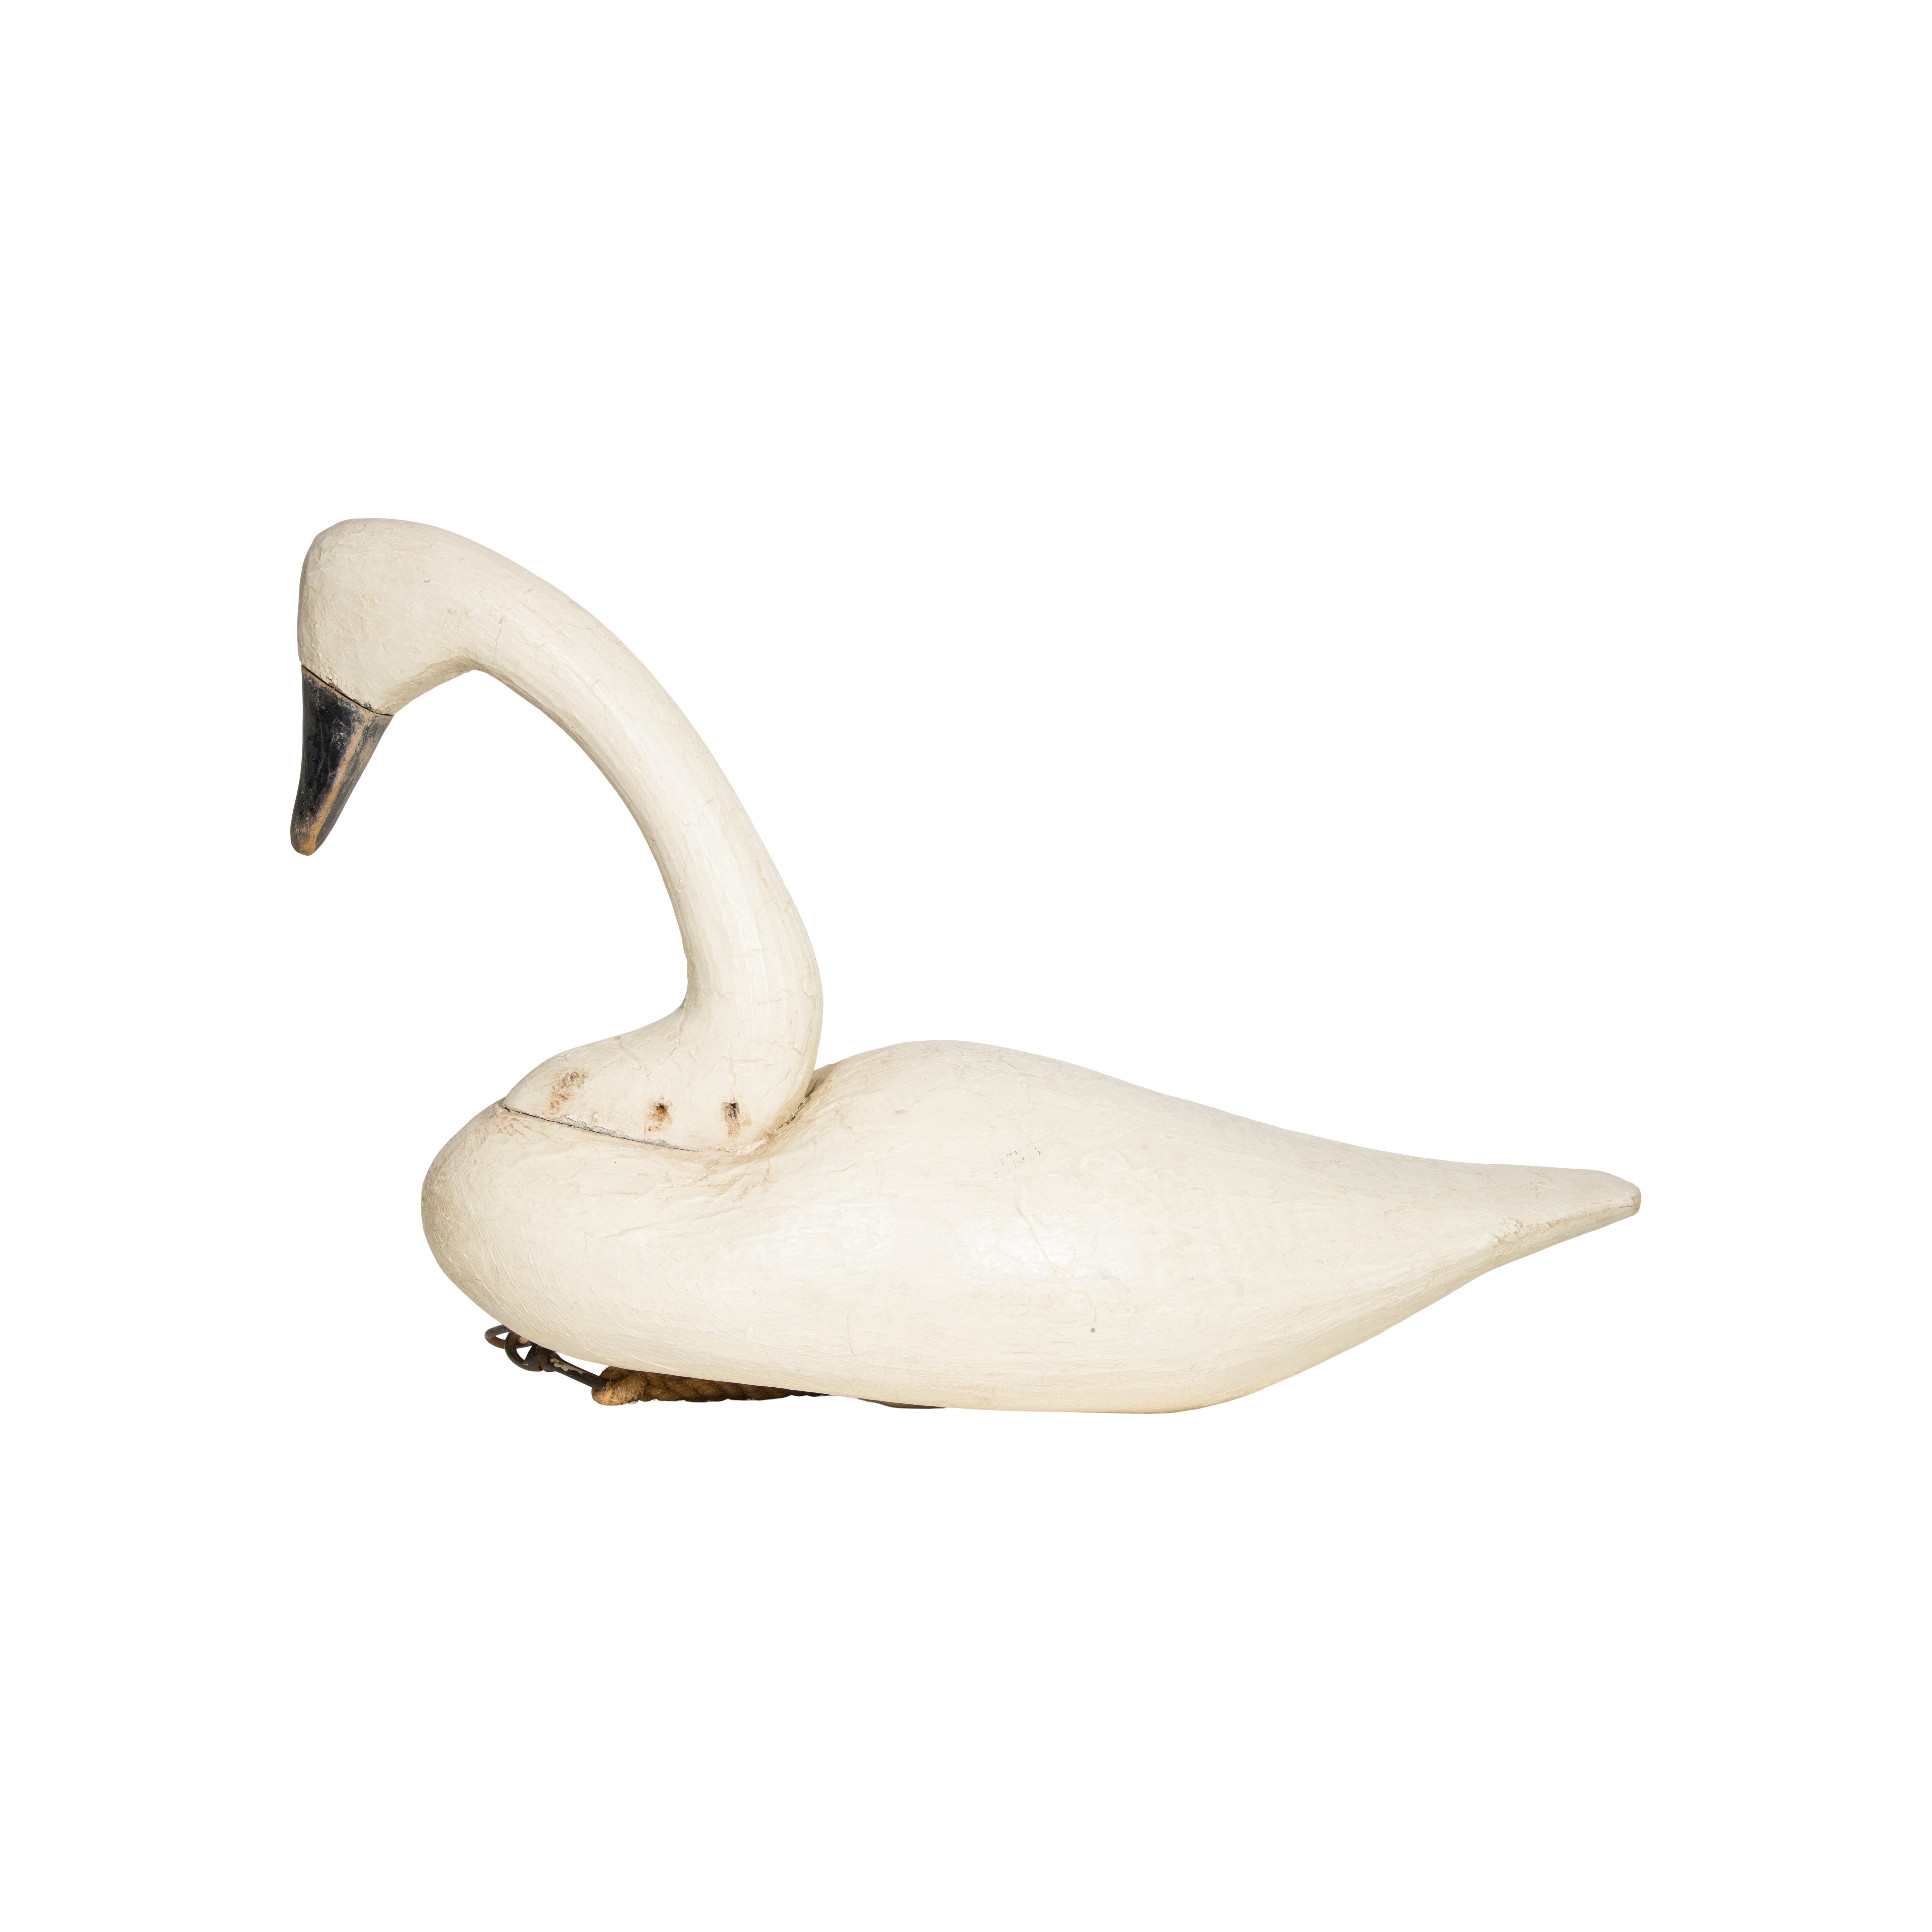 antique swan decoy